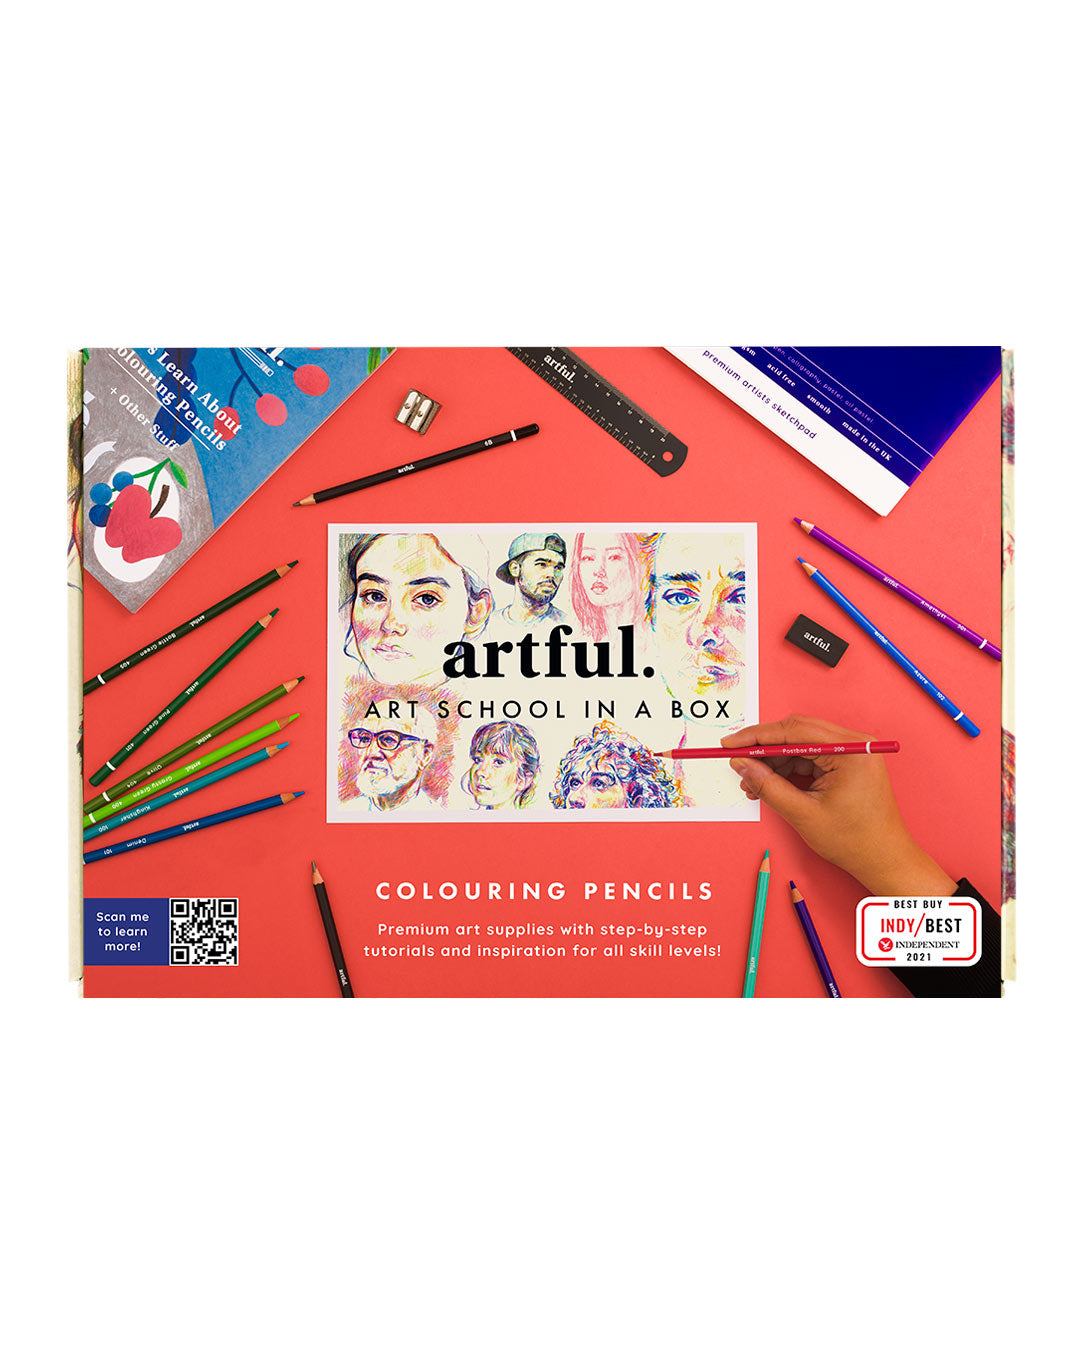 Artful: Art School in a Box - Coloring Pencil Edition